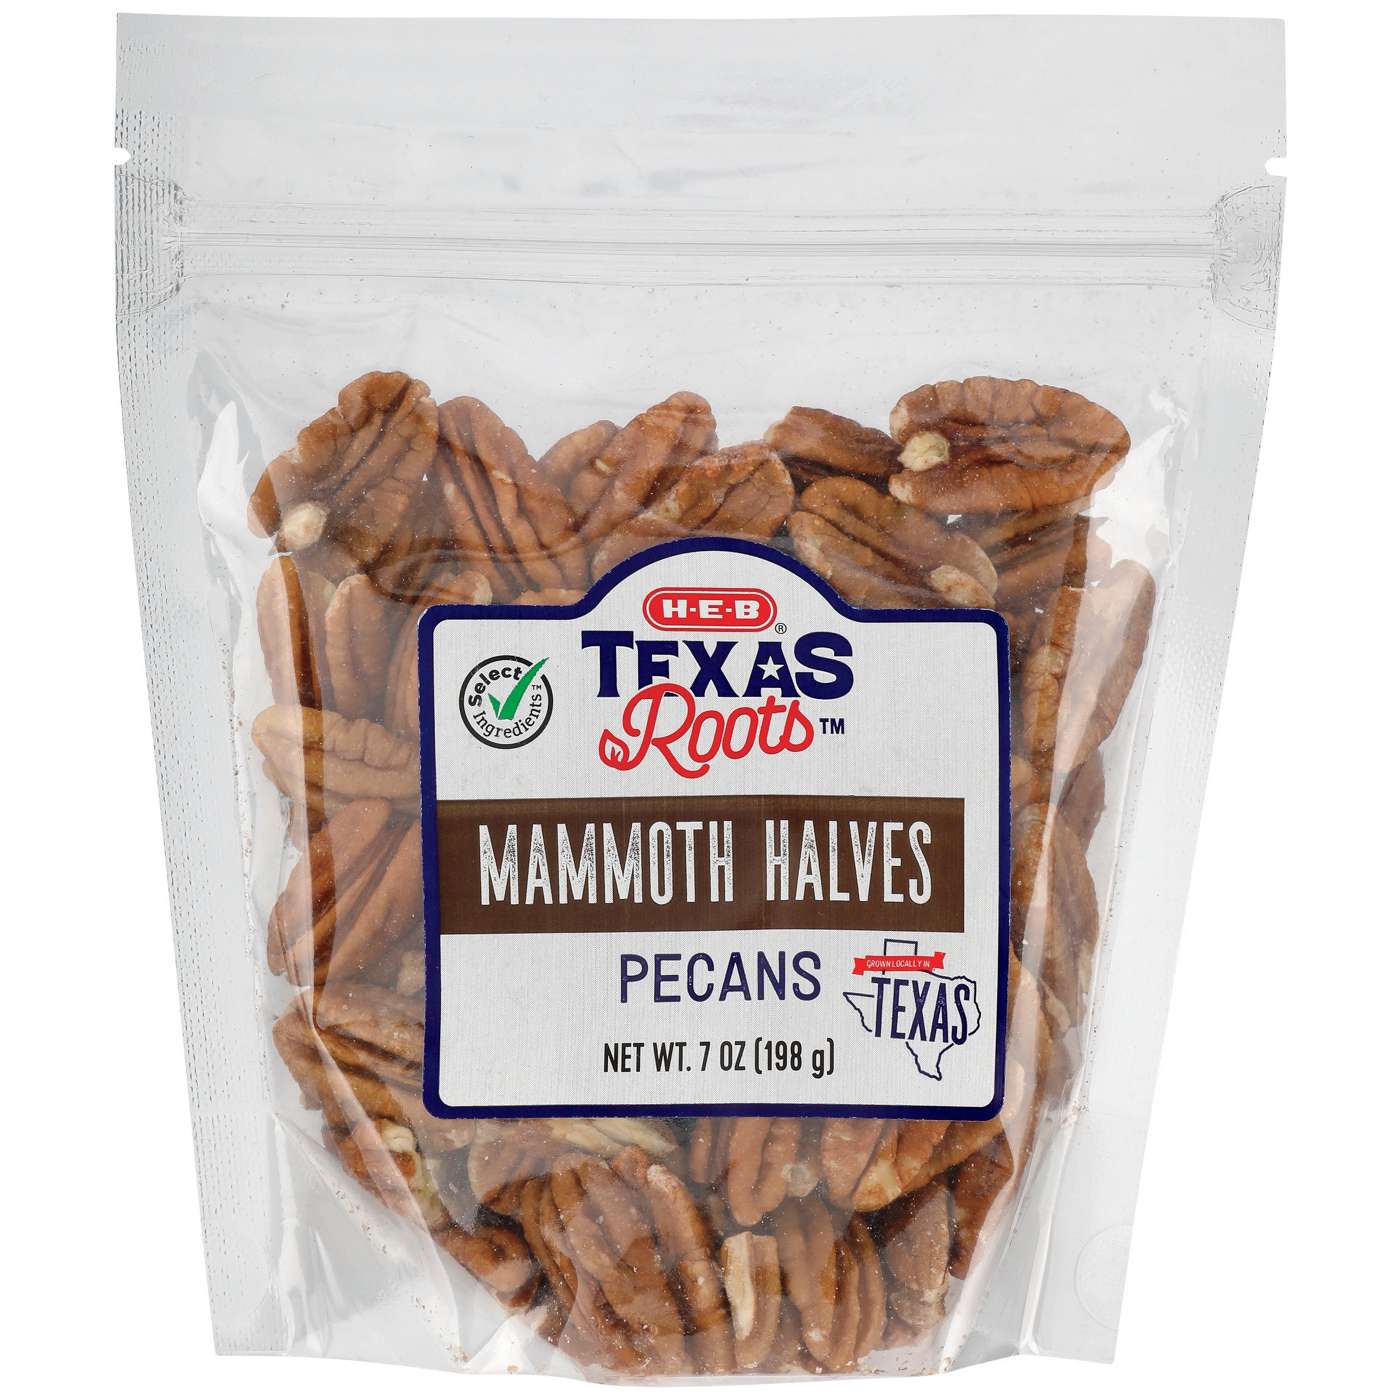 H-E-B Texas Roots Mammoth Pecan Halves; image 1 of 2